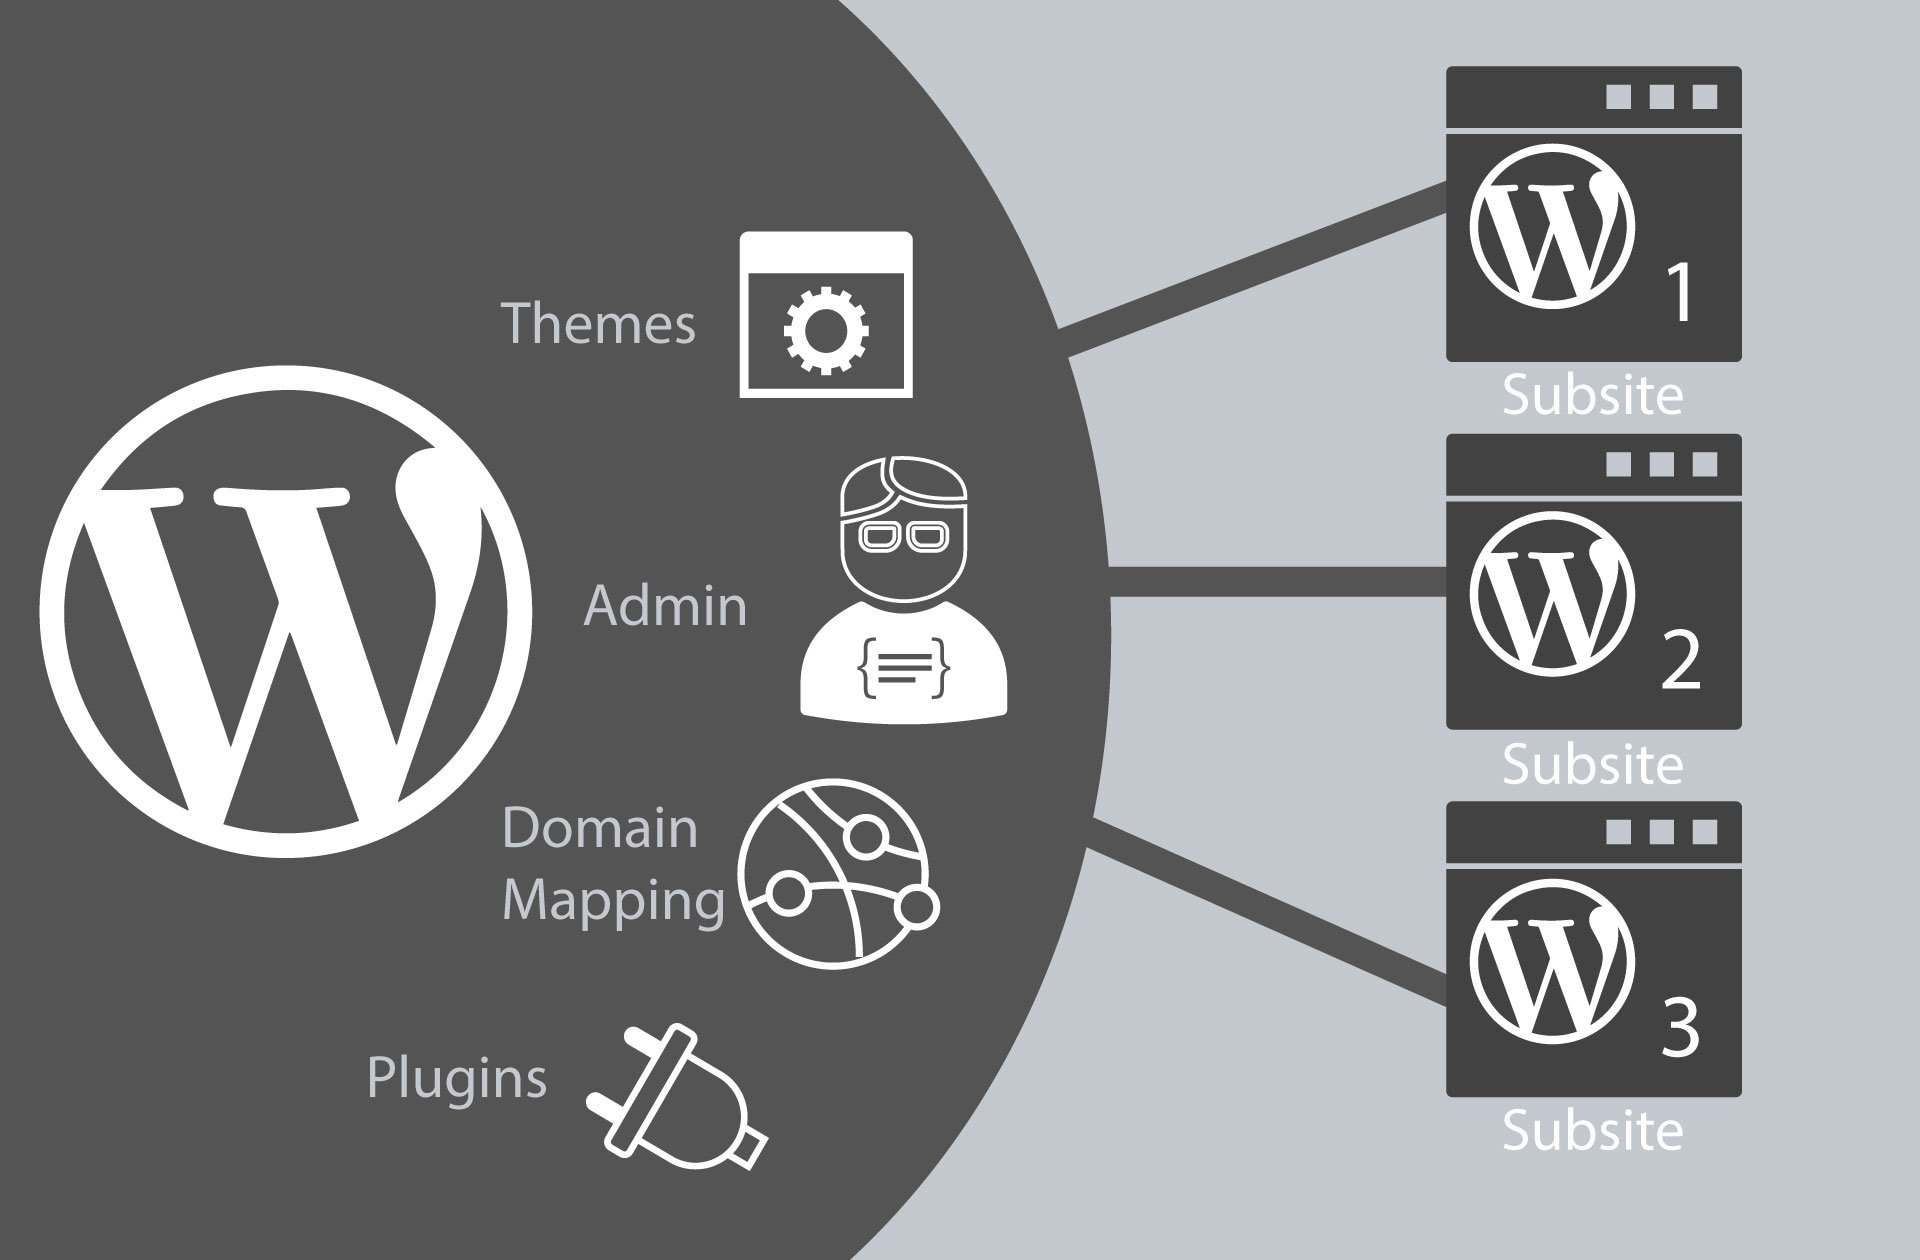 understanding a WordPress Multisite visual diagram.